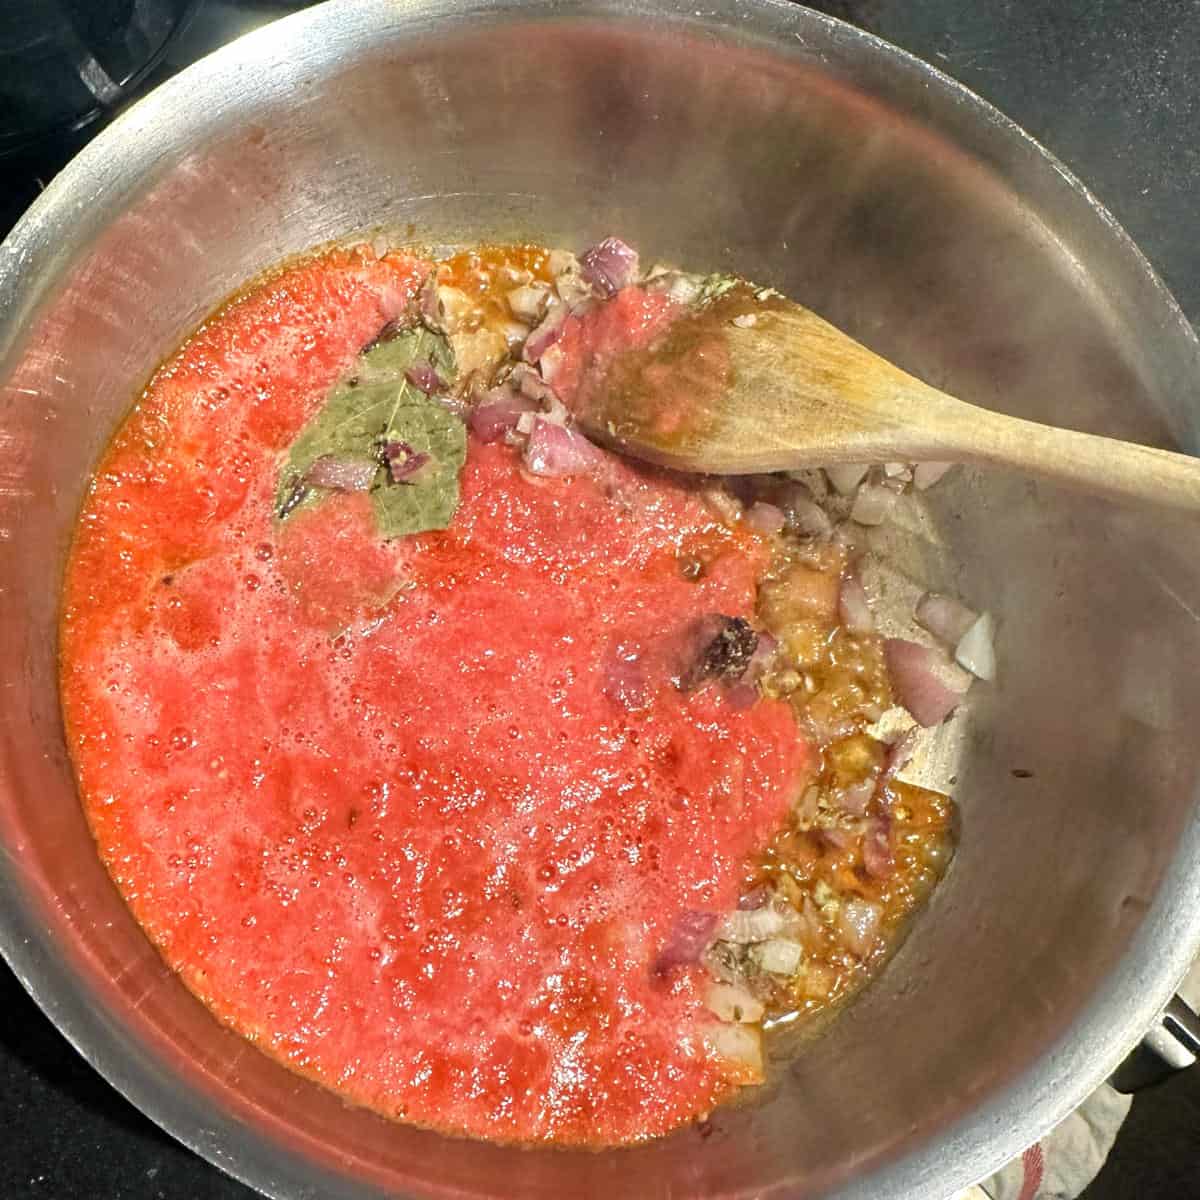 Tomato puree added to pot.